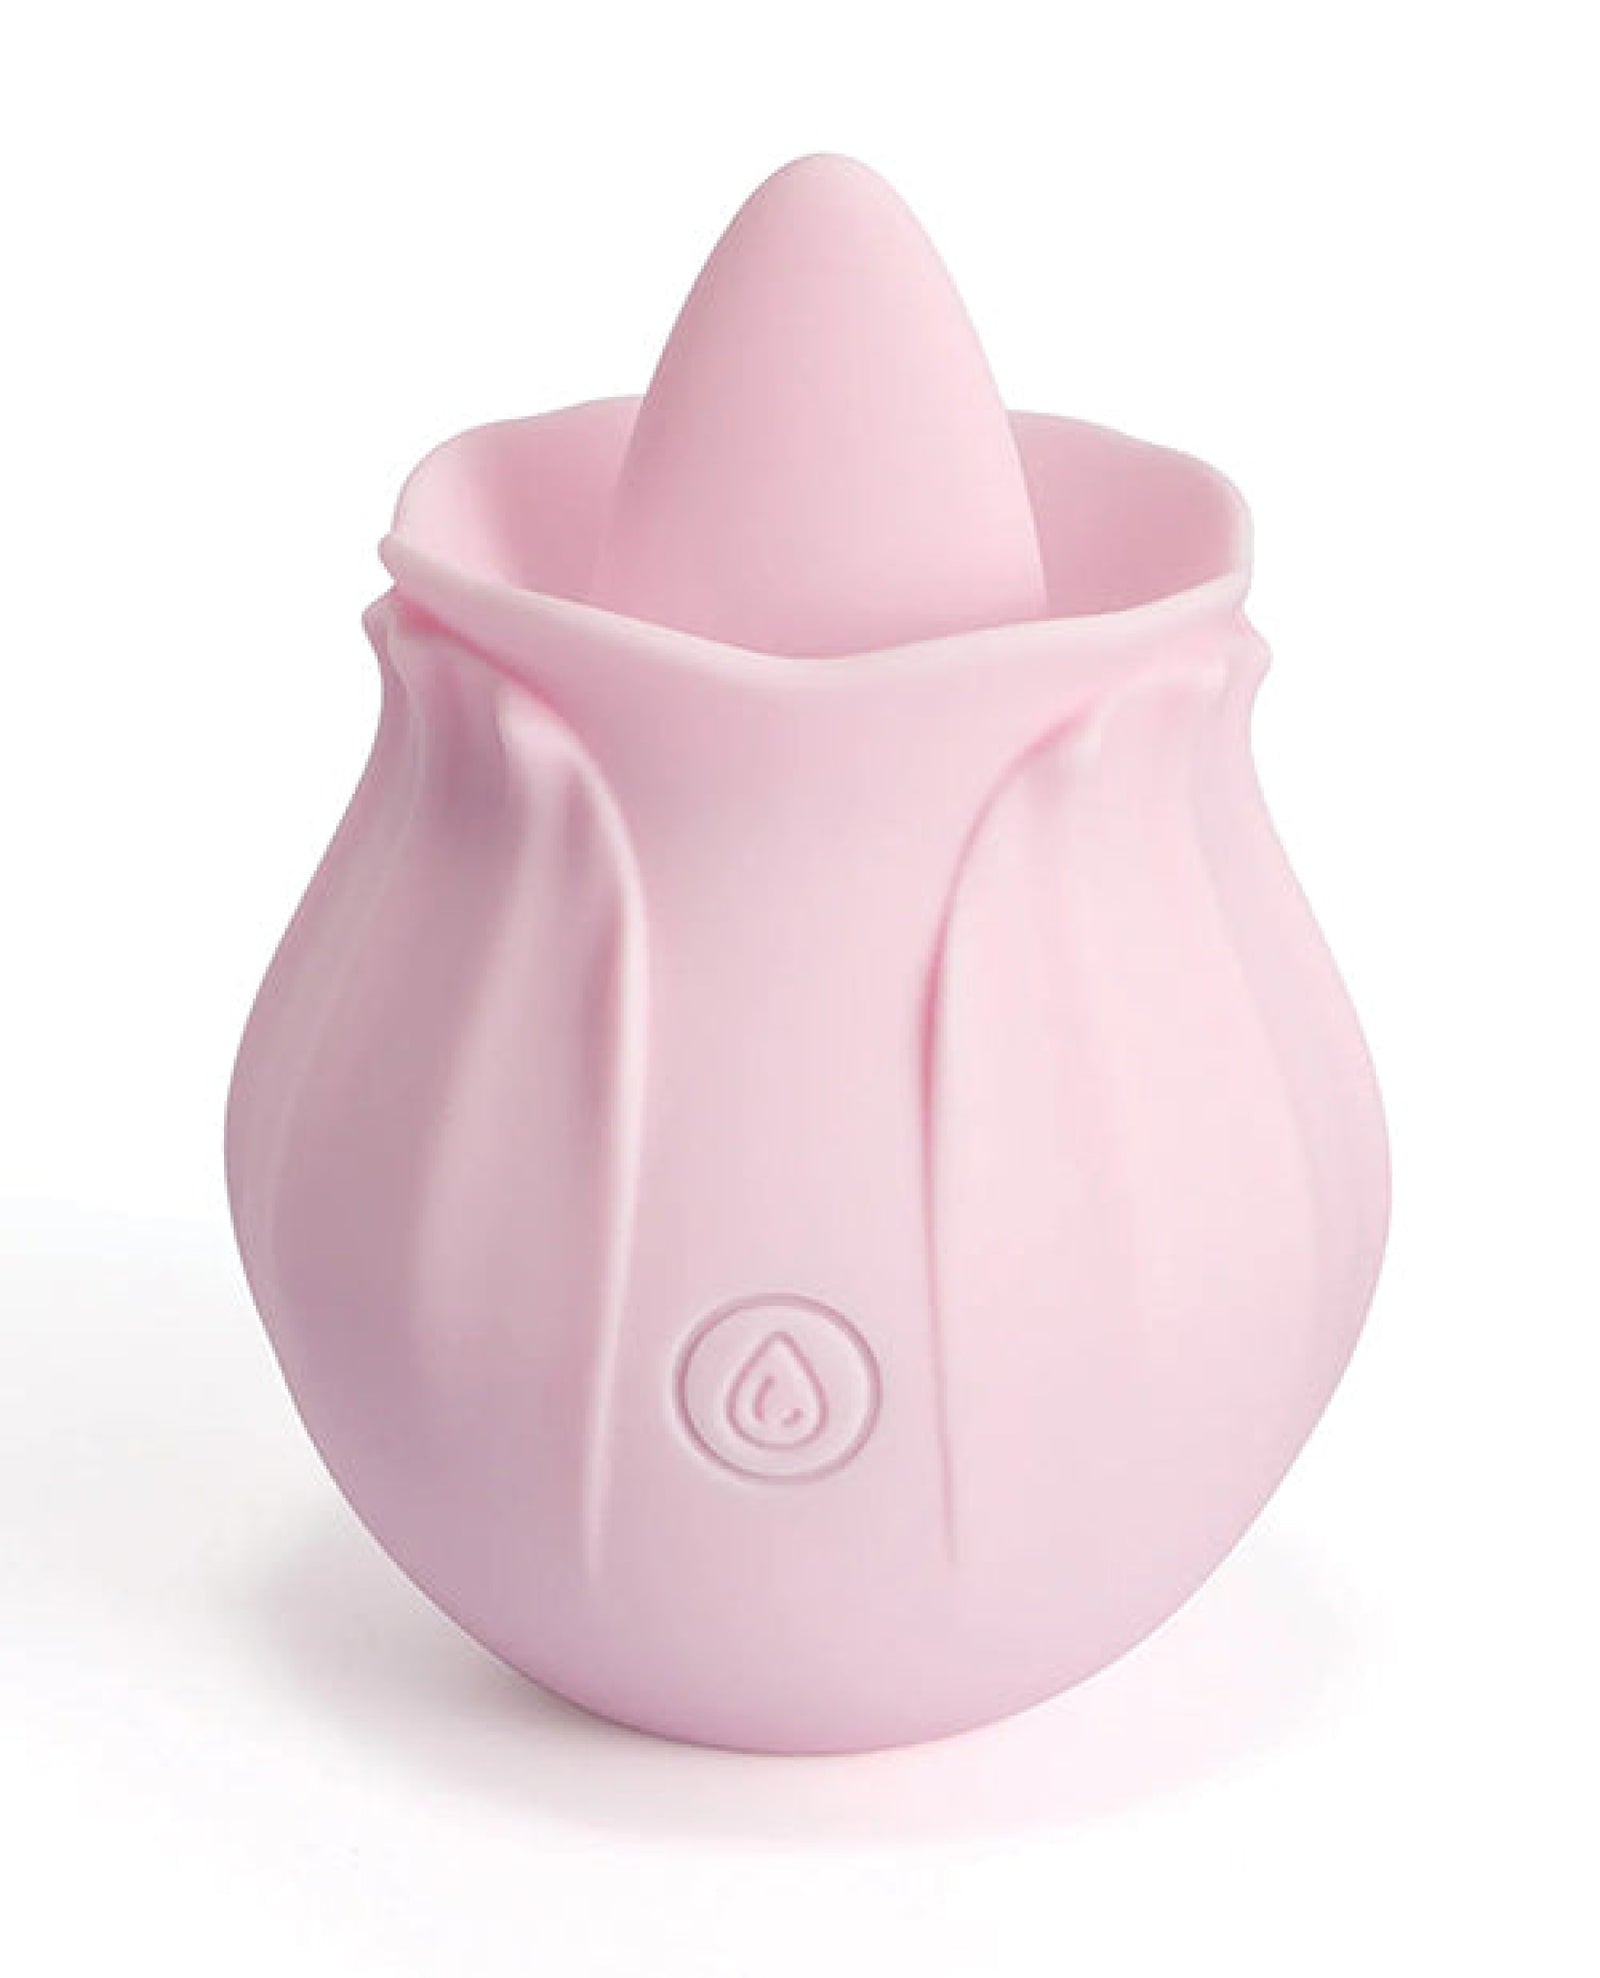 Nectar Clit Licking Rose Vibrator - Pink Uc Global Trade